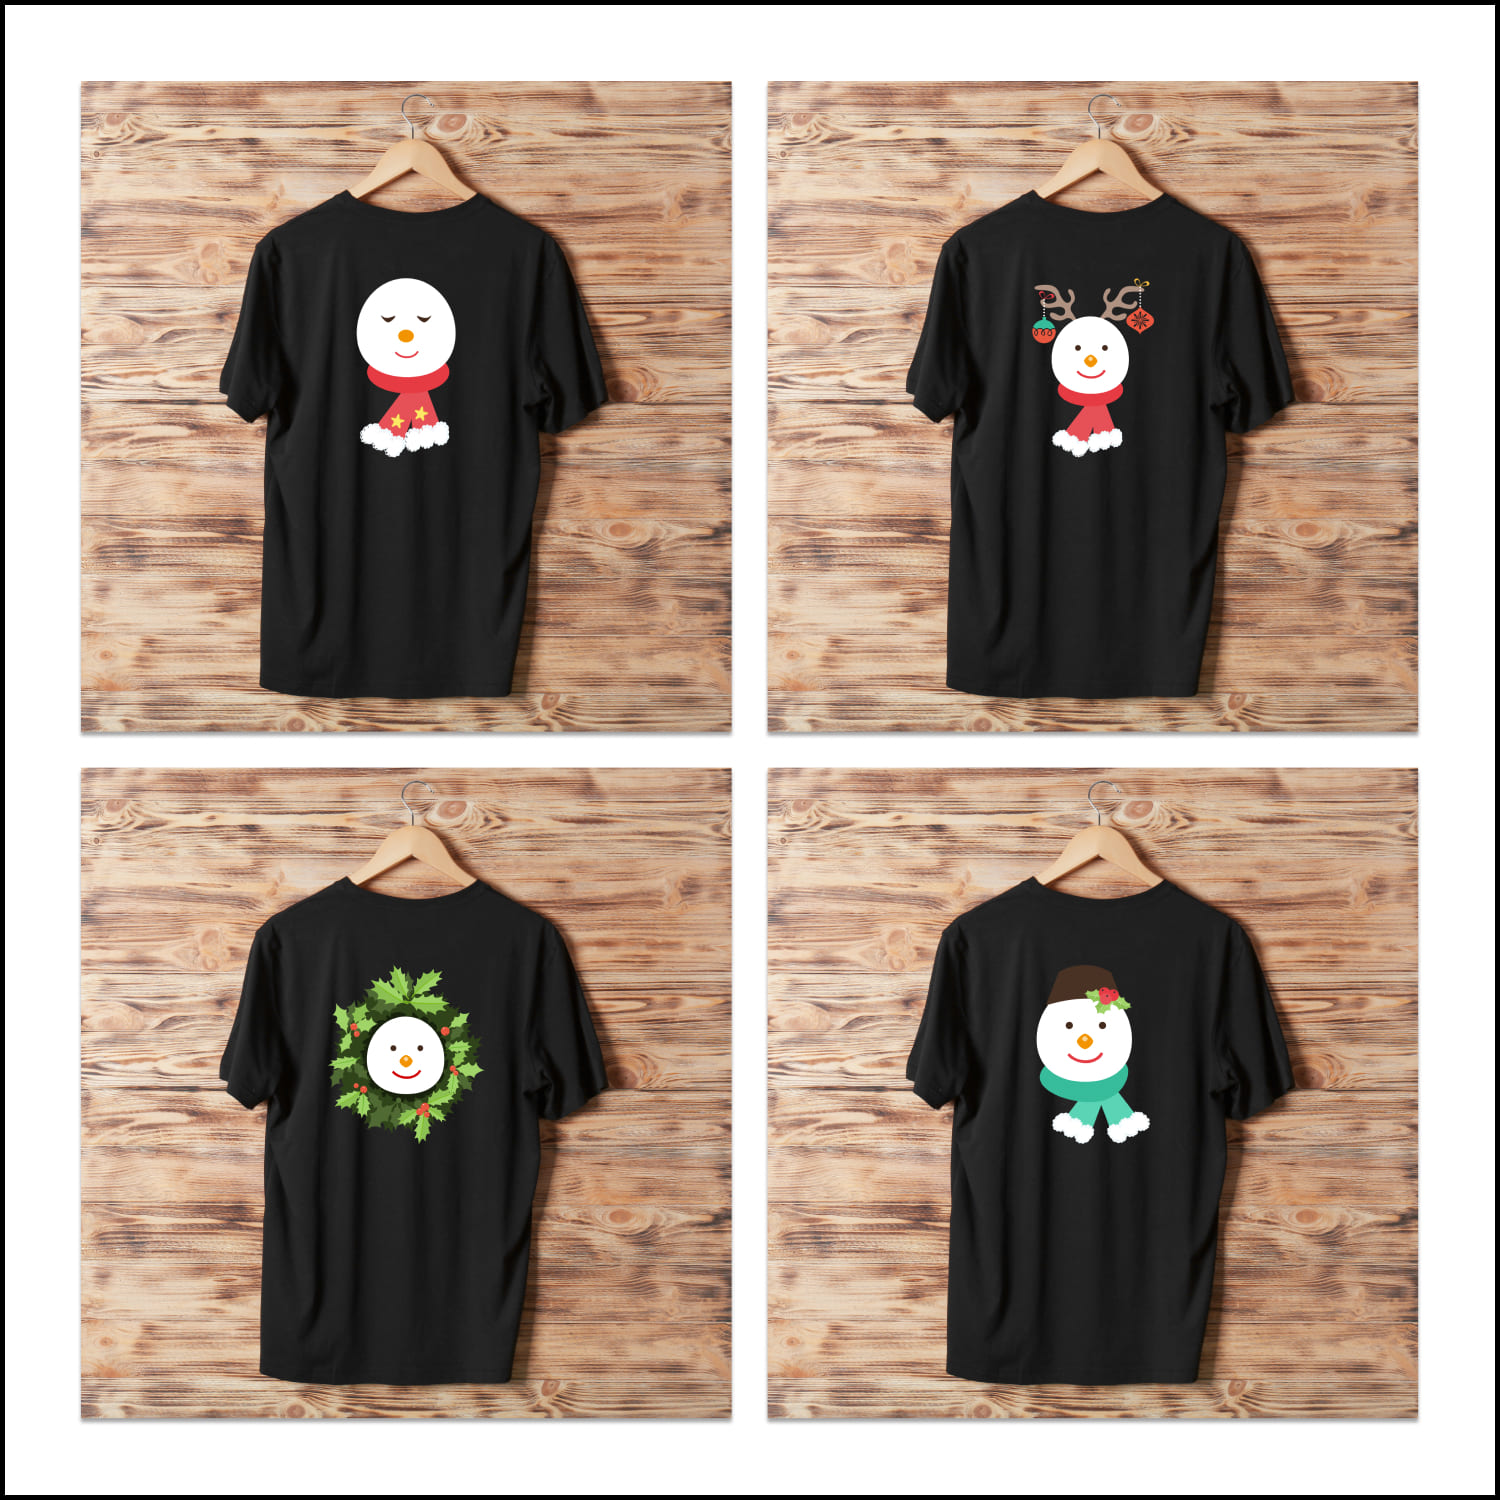 Cute Snowman Face SVG T-shirt Designs cover.